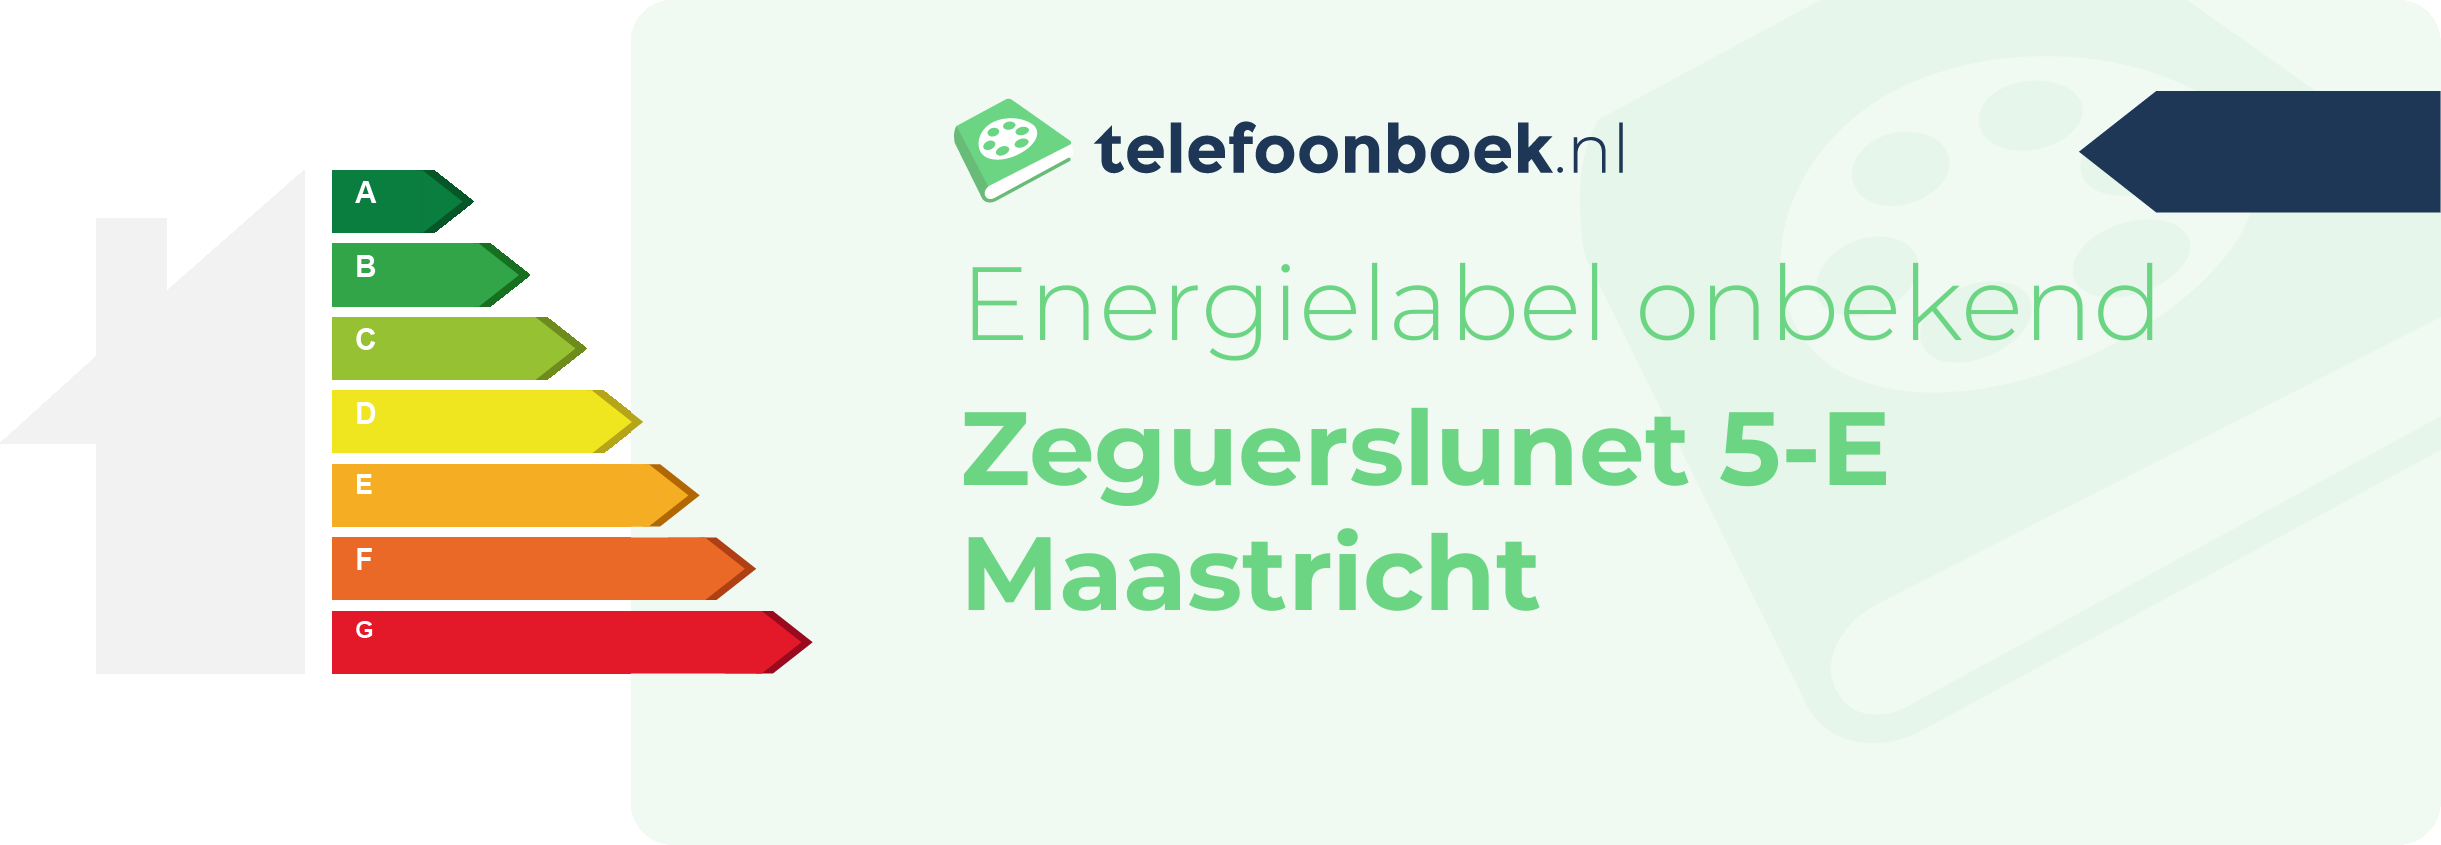 Energielabel Zeguerslunet 5-E Maastricht